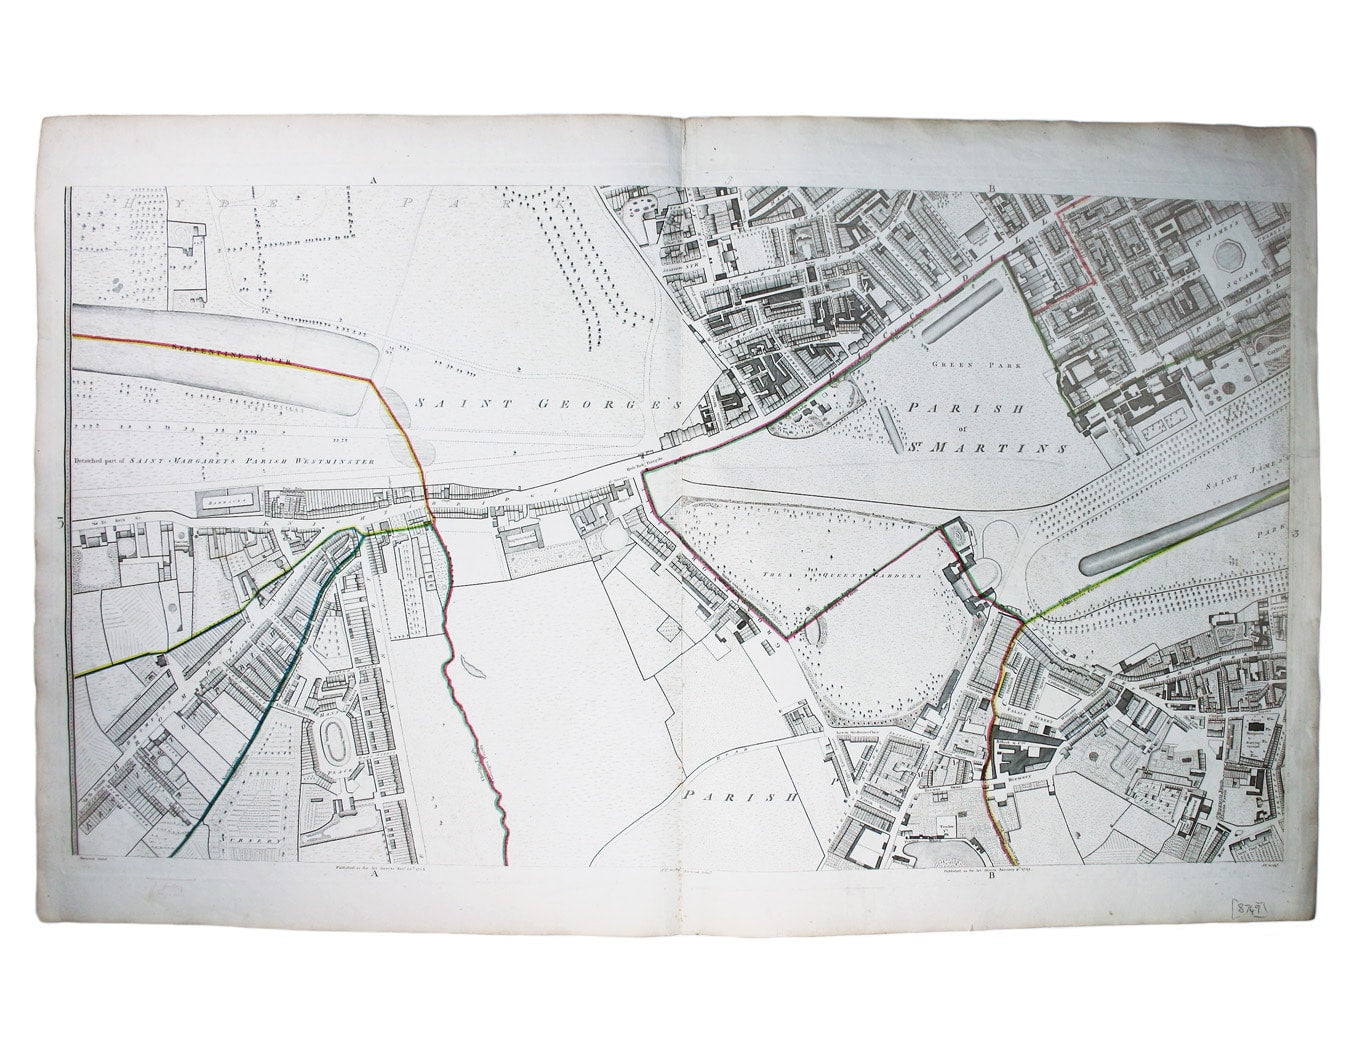 Horwood’s Large-Scale Map of St James’s & Knightsbridge